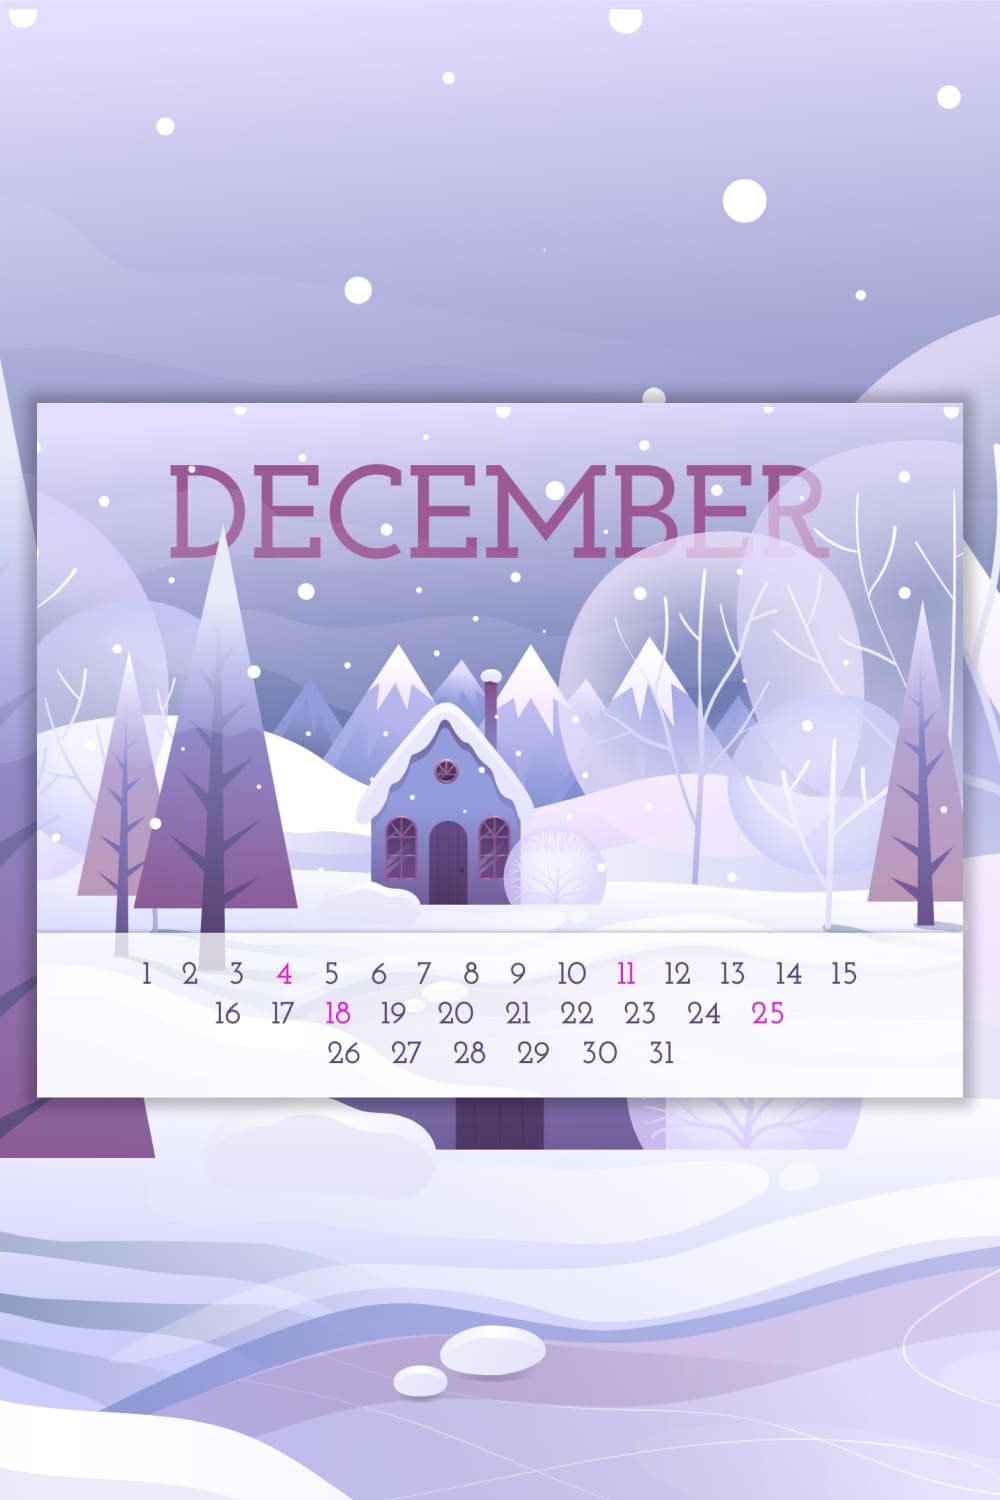 Free December Printable Calendar - Pinterest.